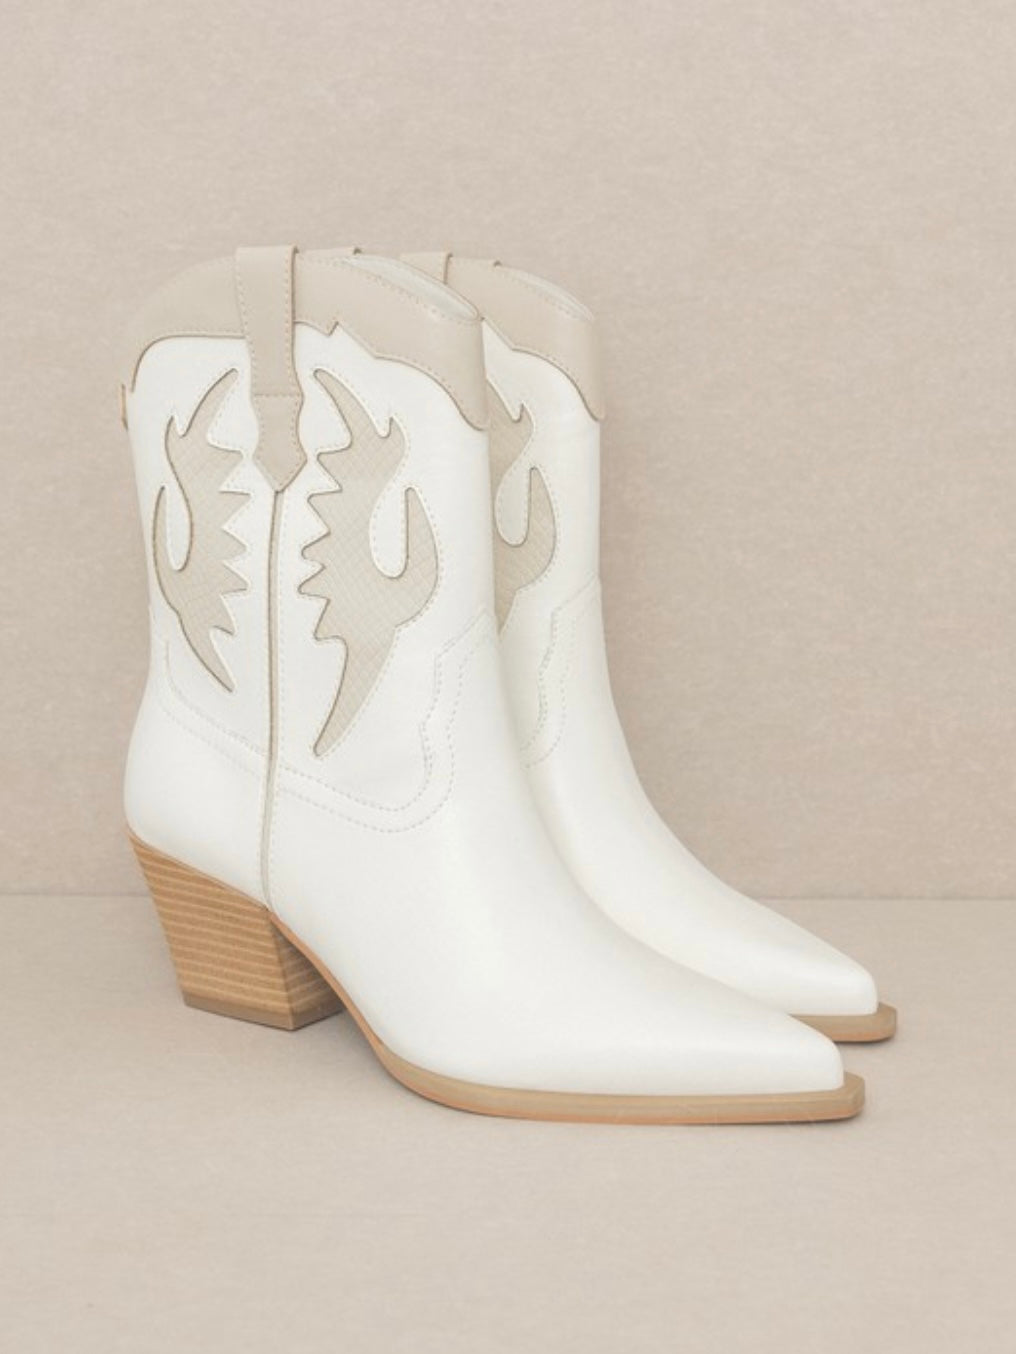 White Houston Western Boots